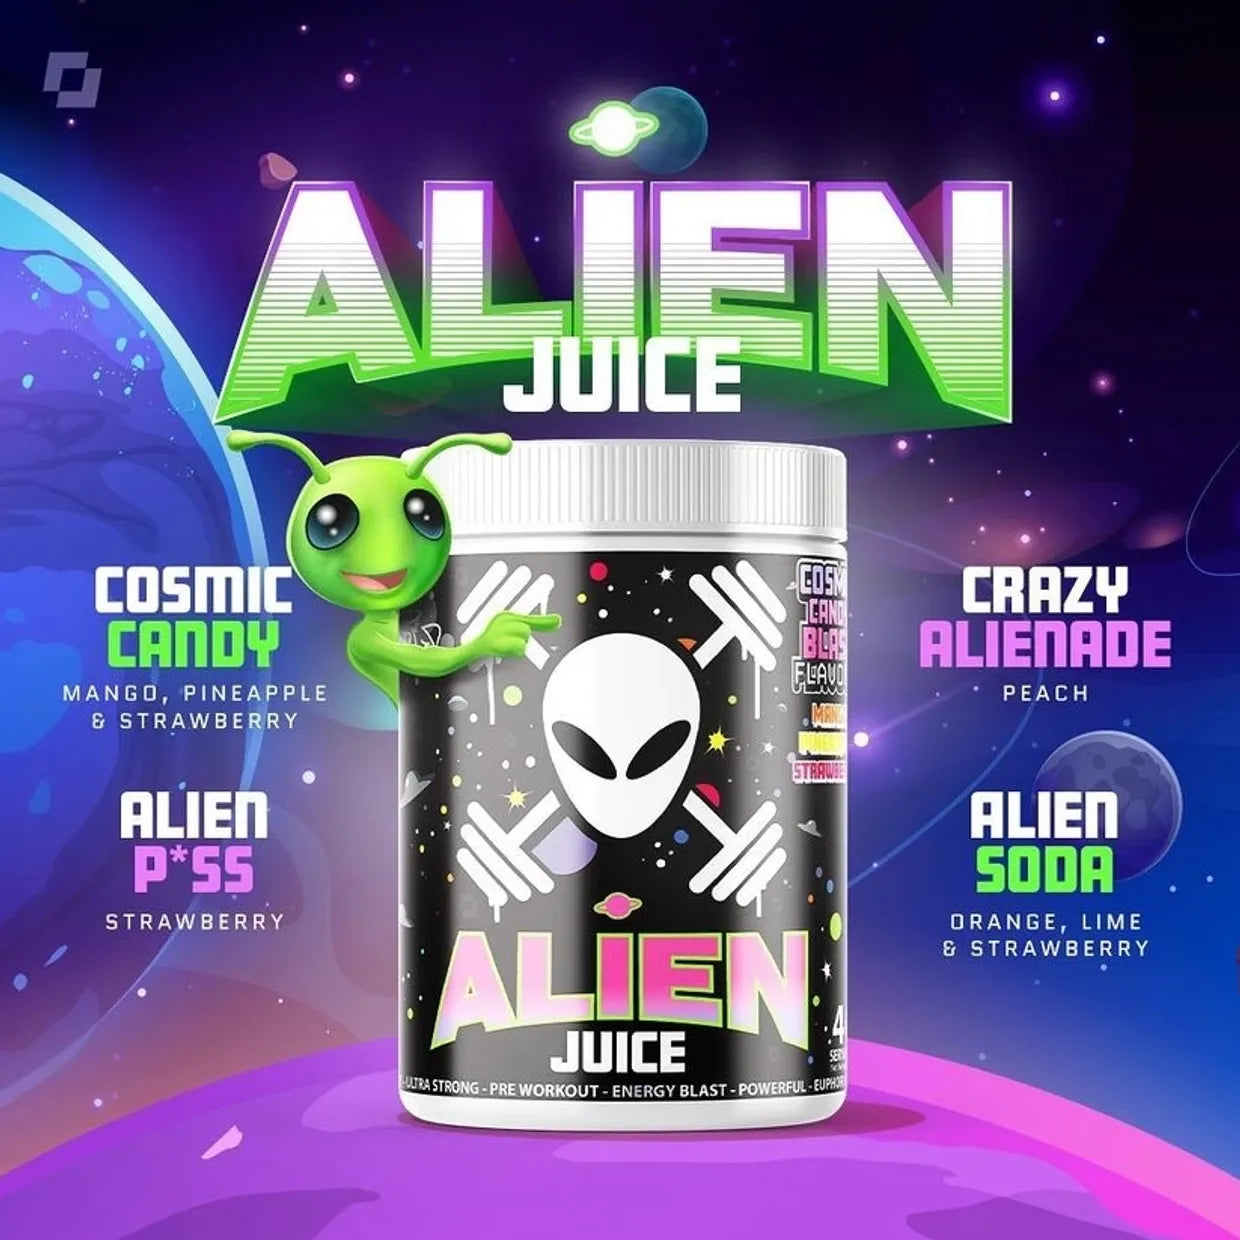 Alien juice product poster